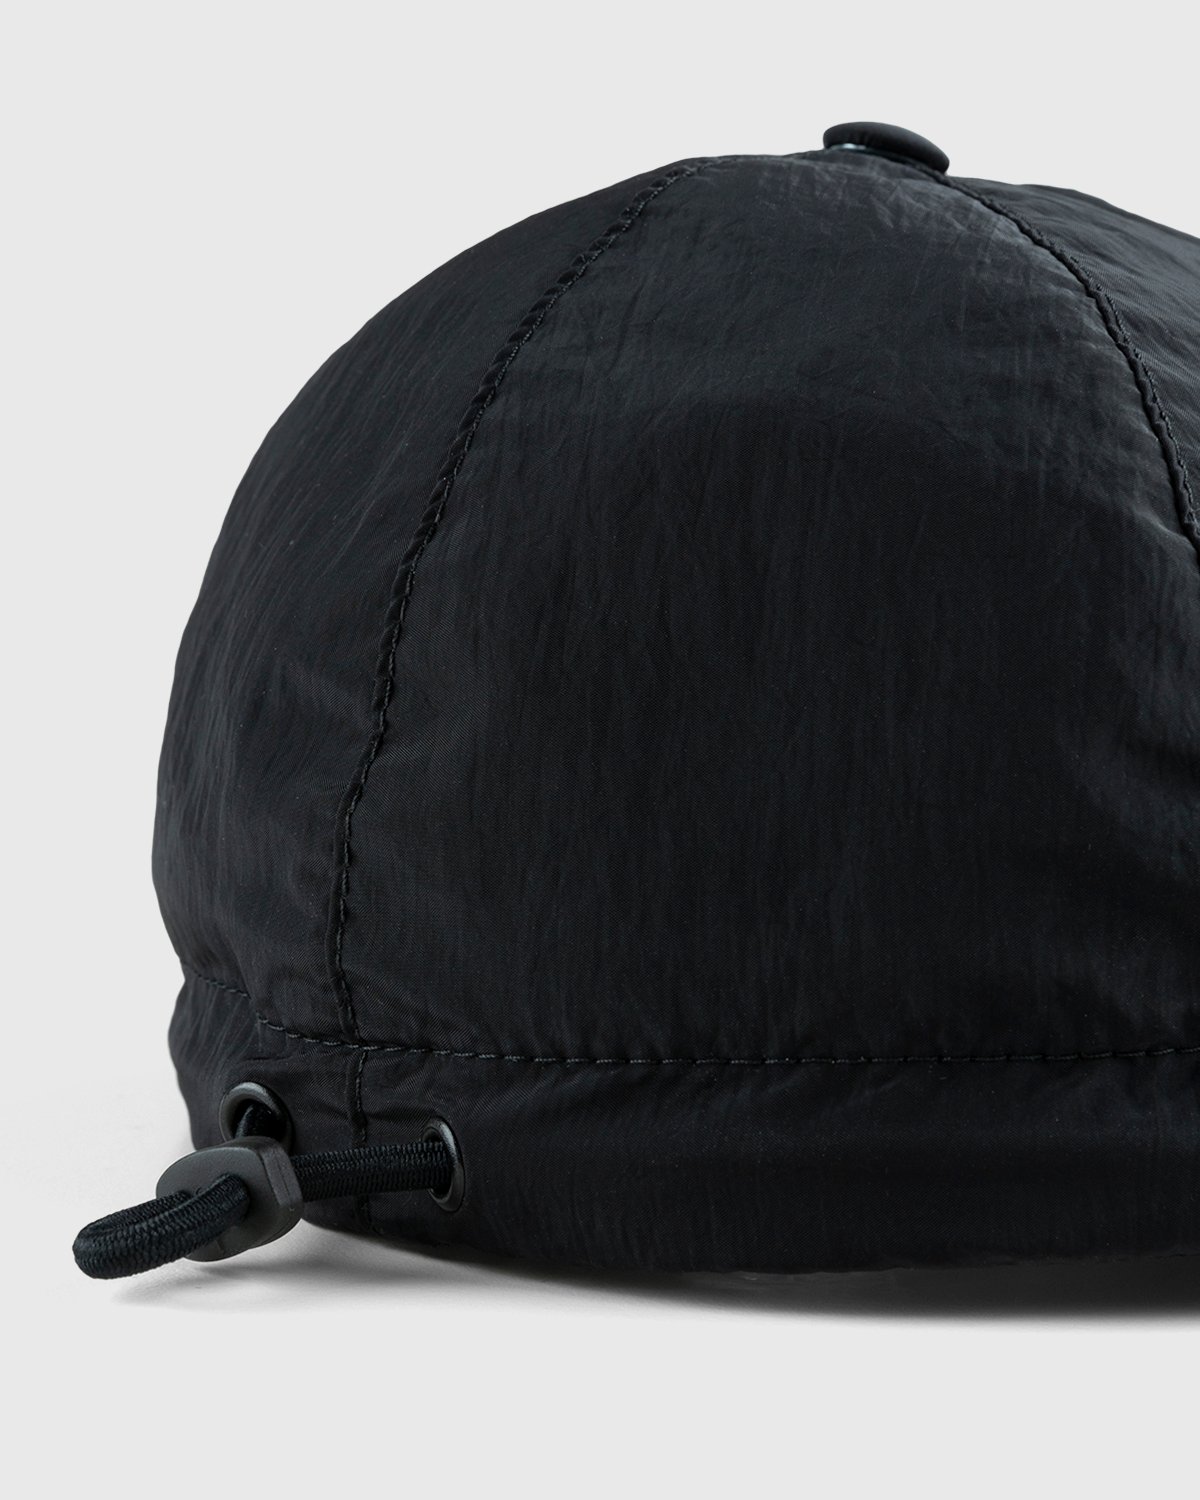 Stone Island - Six Panel Hat Black - Accessories - Black - Image 5